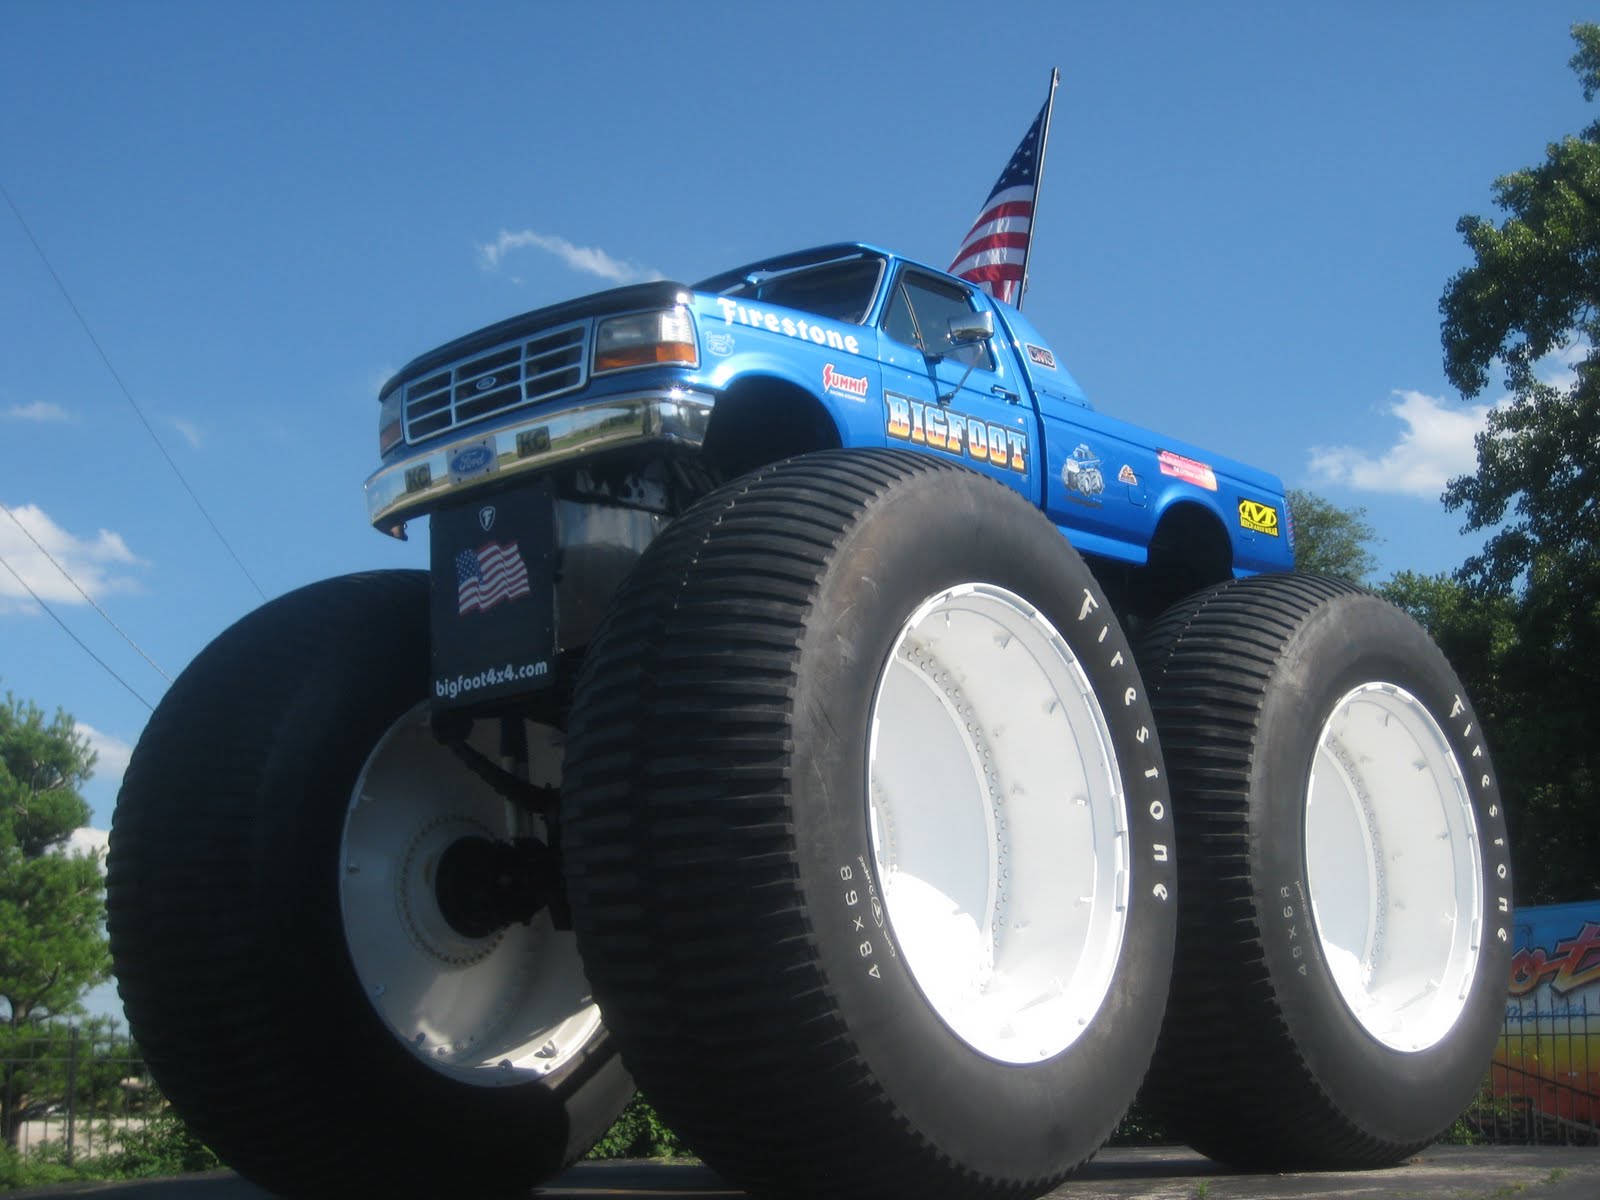 Bigfoot ford monster truck #10